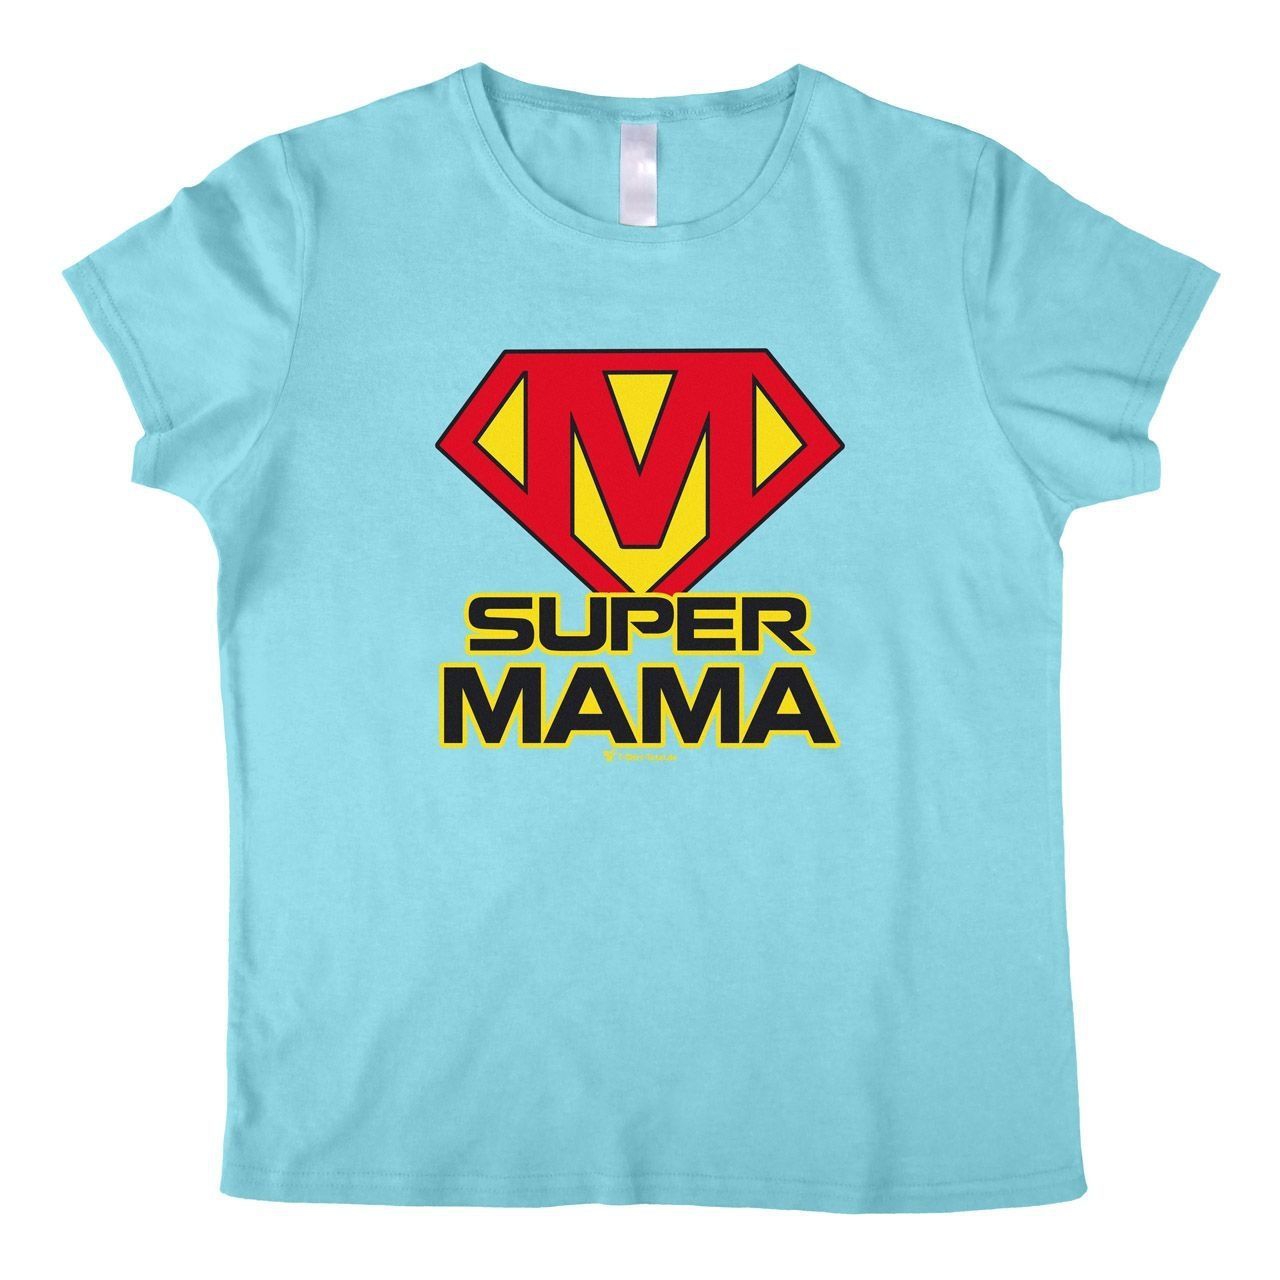 Super Mama Woman T-Shirt hellblau 2-Extra Large